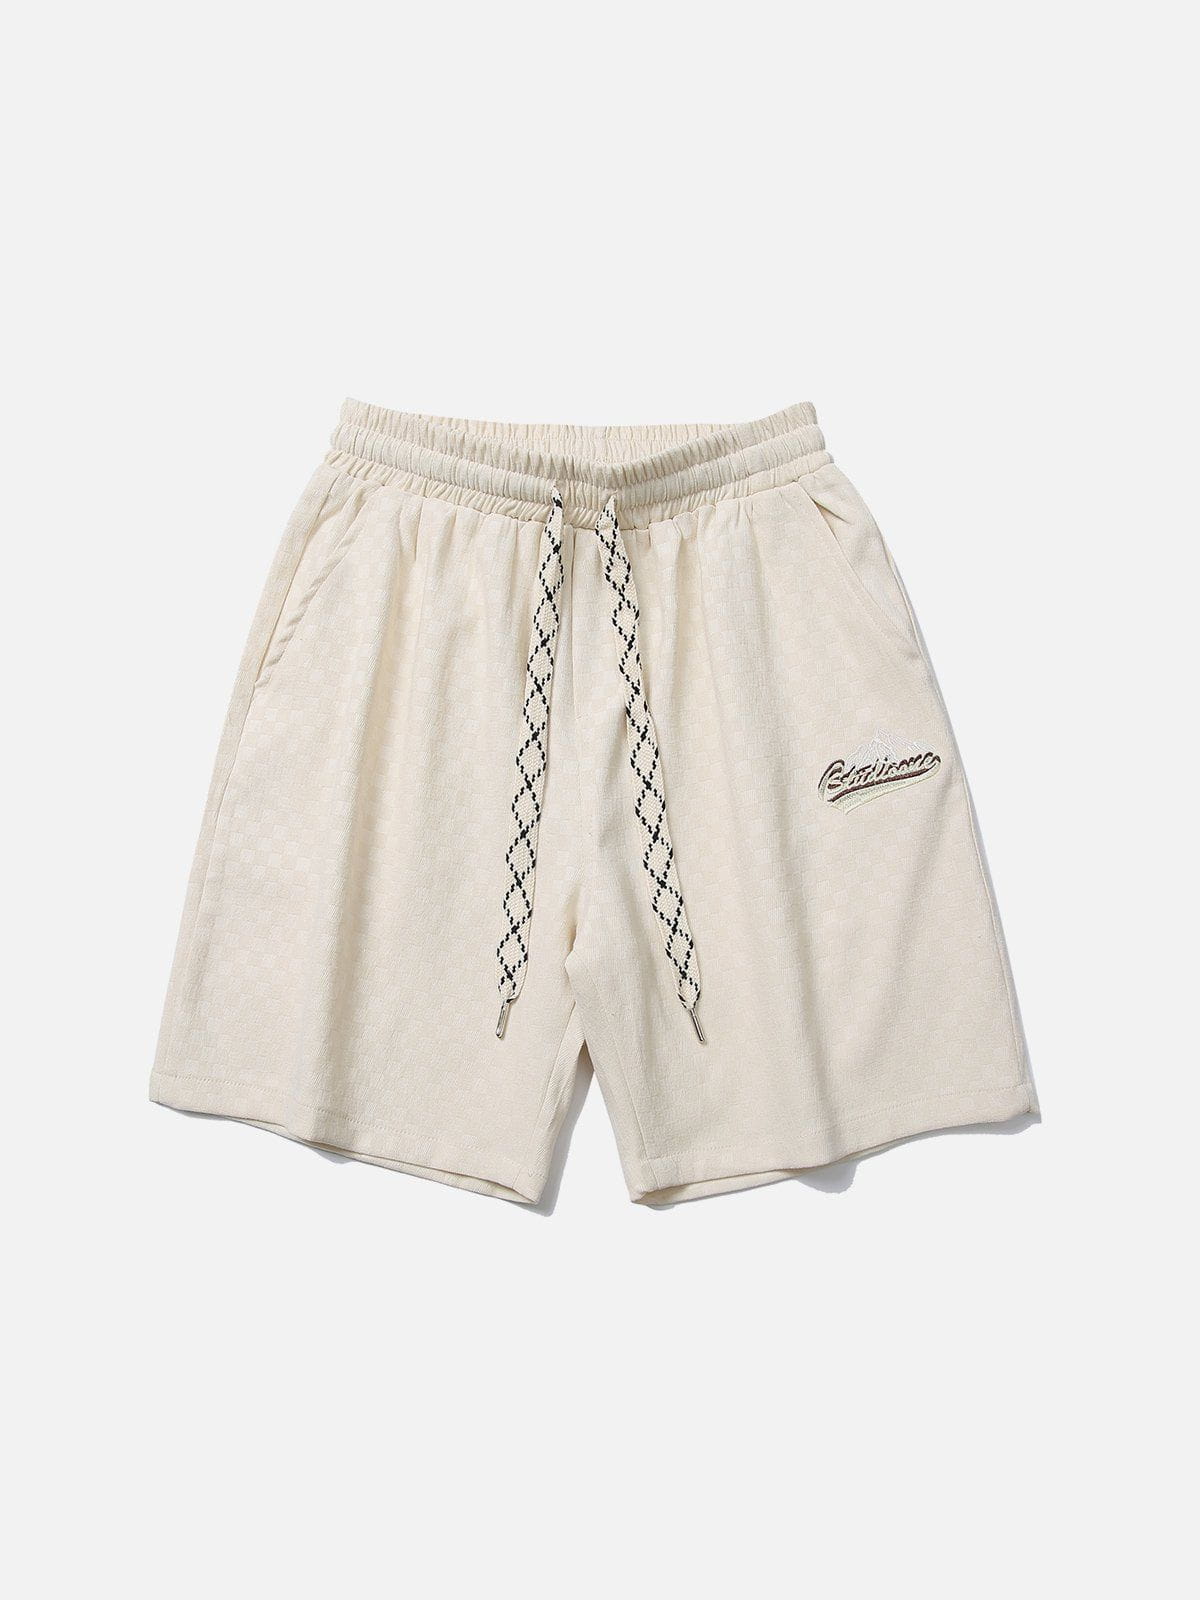 Majesda® - Embroidery Mountain Plaid Shorts outfit ideas streetwear fashion